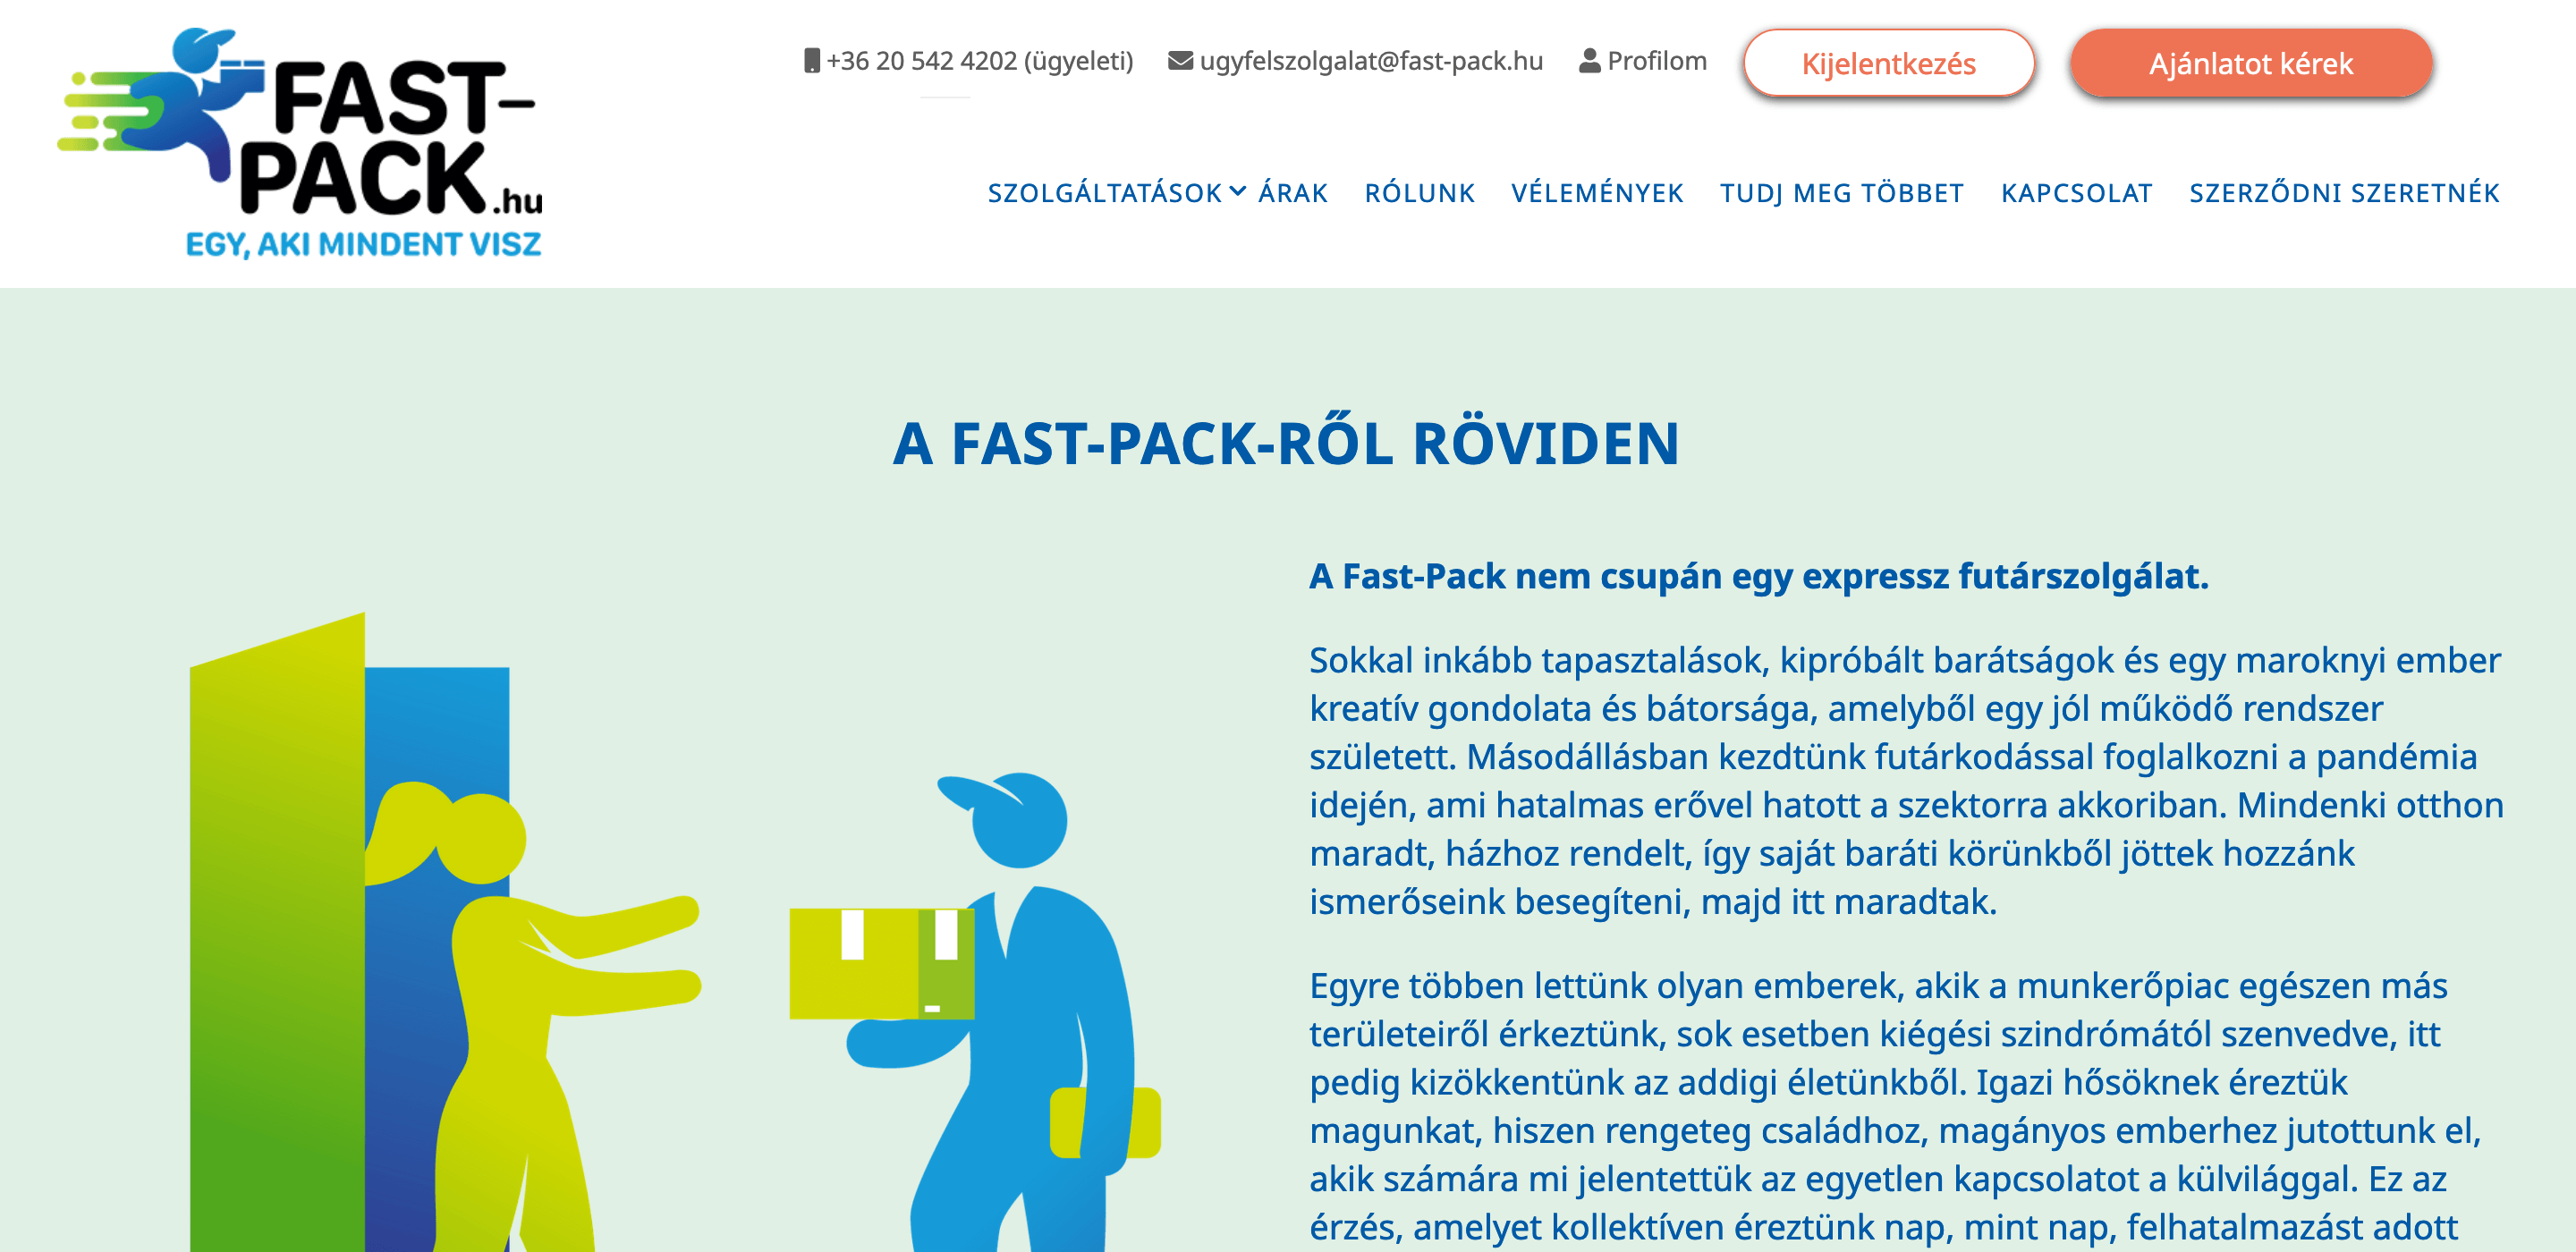 Fast-Pack.hu